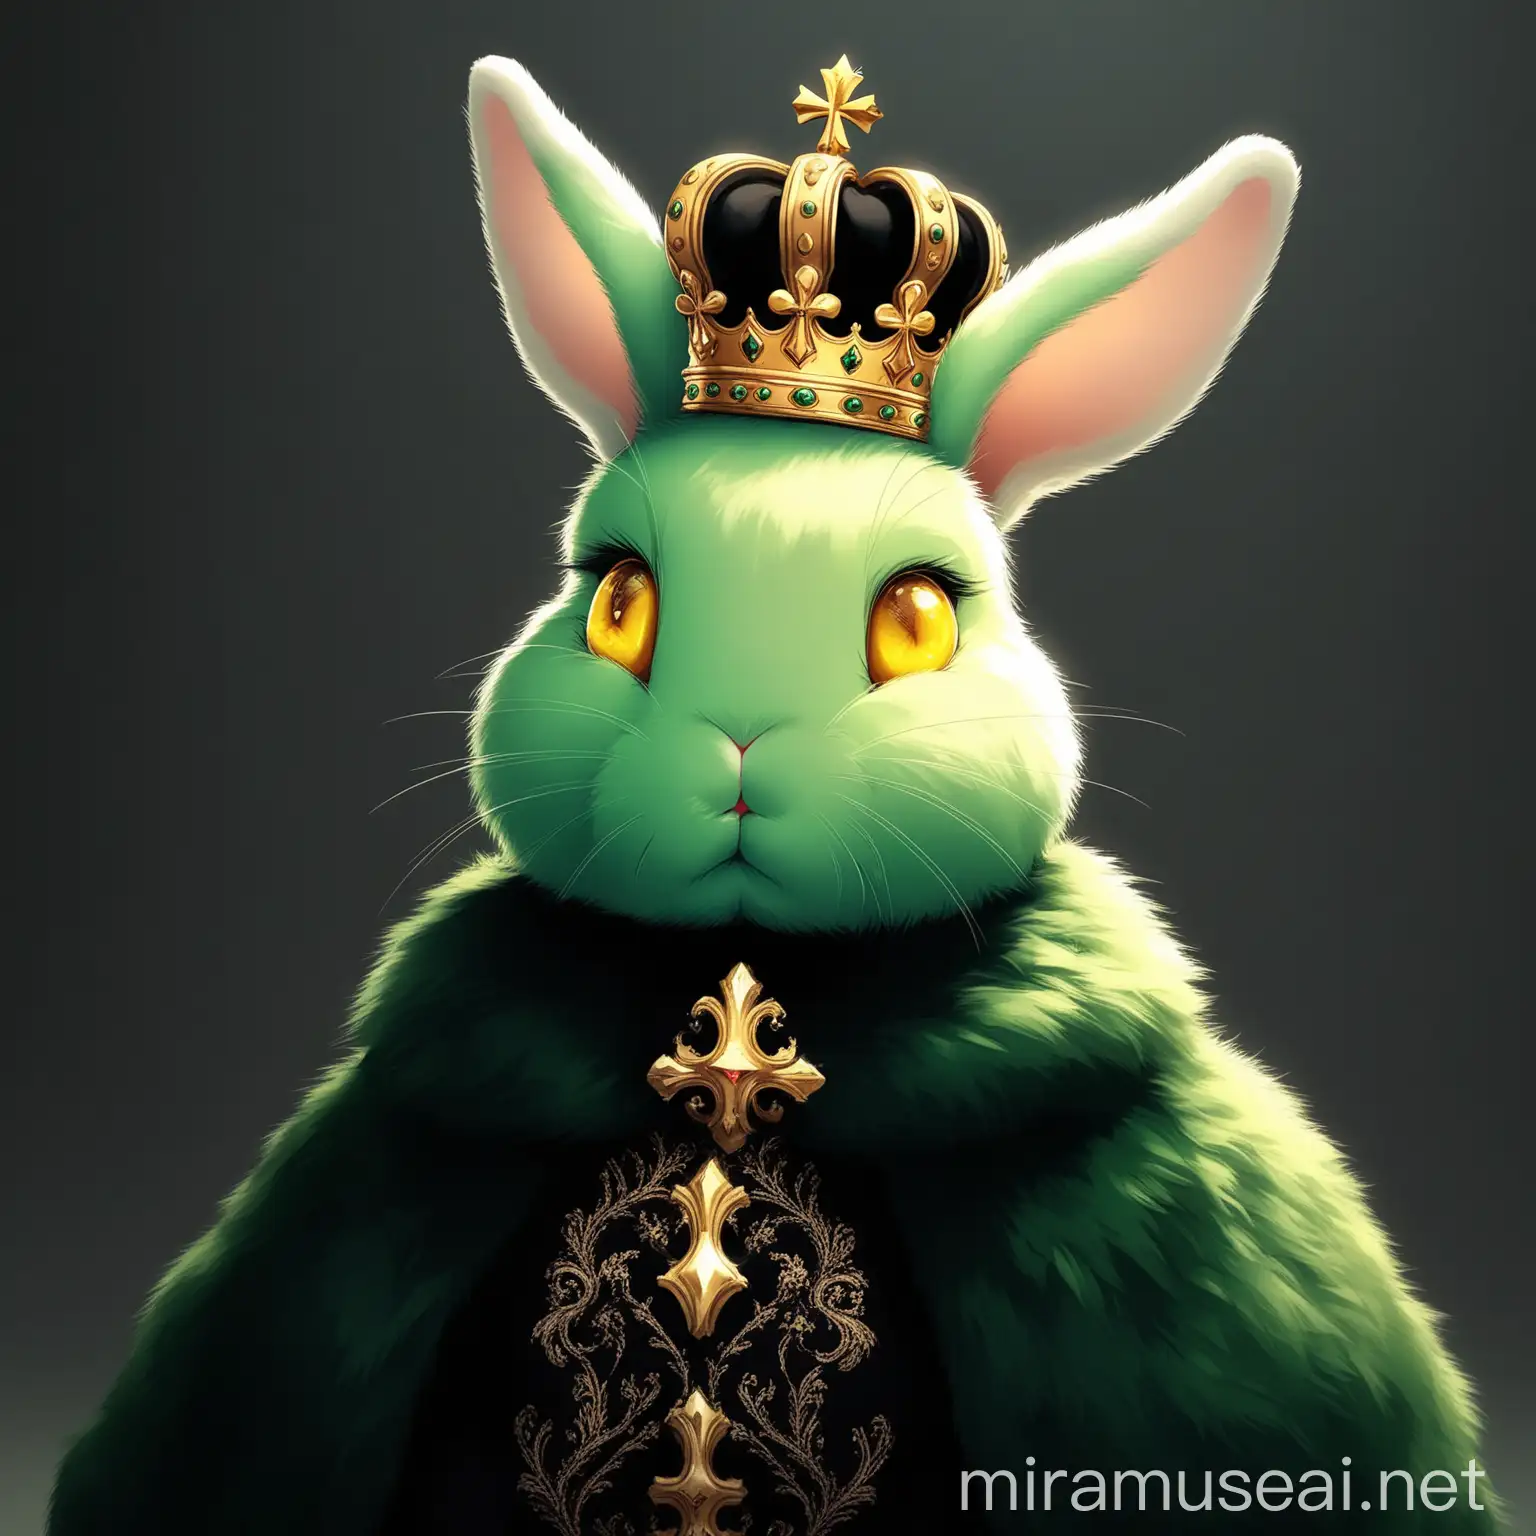 Majestic GreenFurred Rabbit in Regal Attire